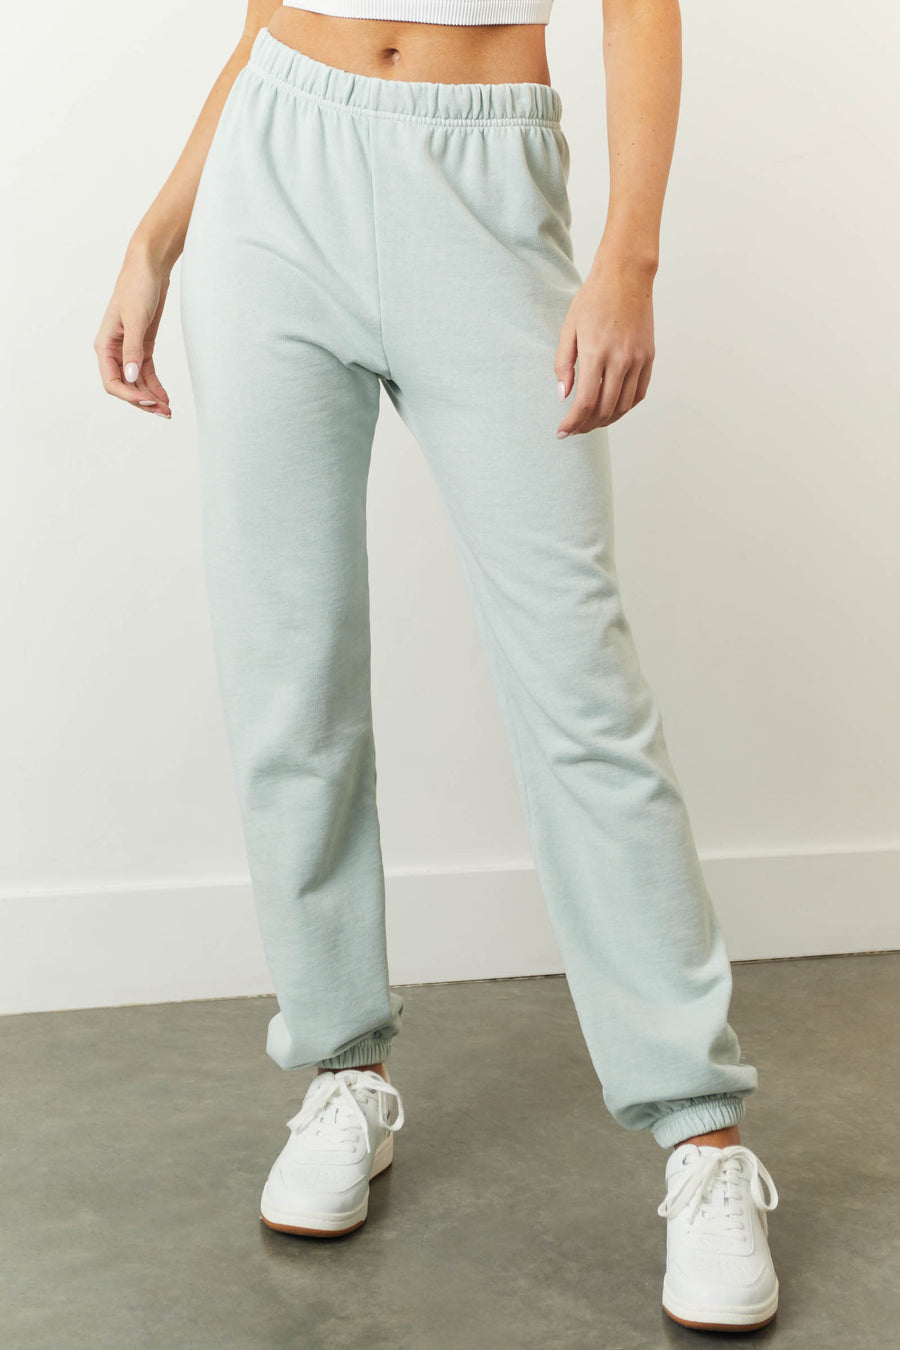 Mint Fleece Lined Solid Cotton Sweatpants